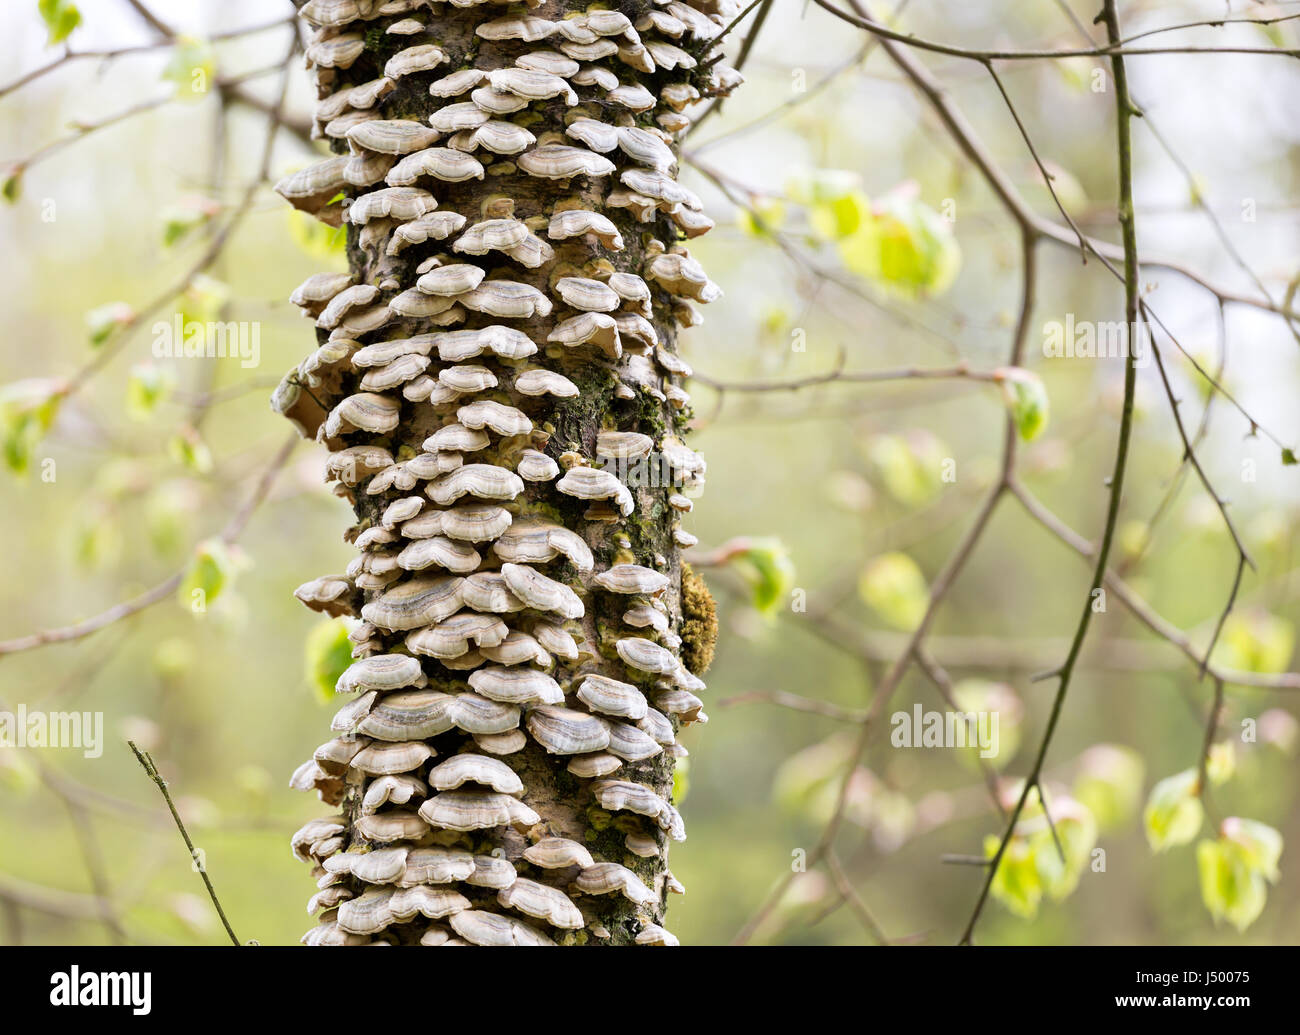 Bracket fungus growing on birch tree Stock Photo